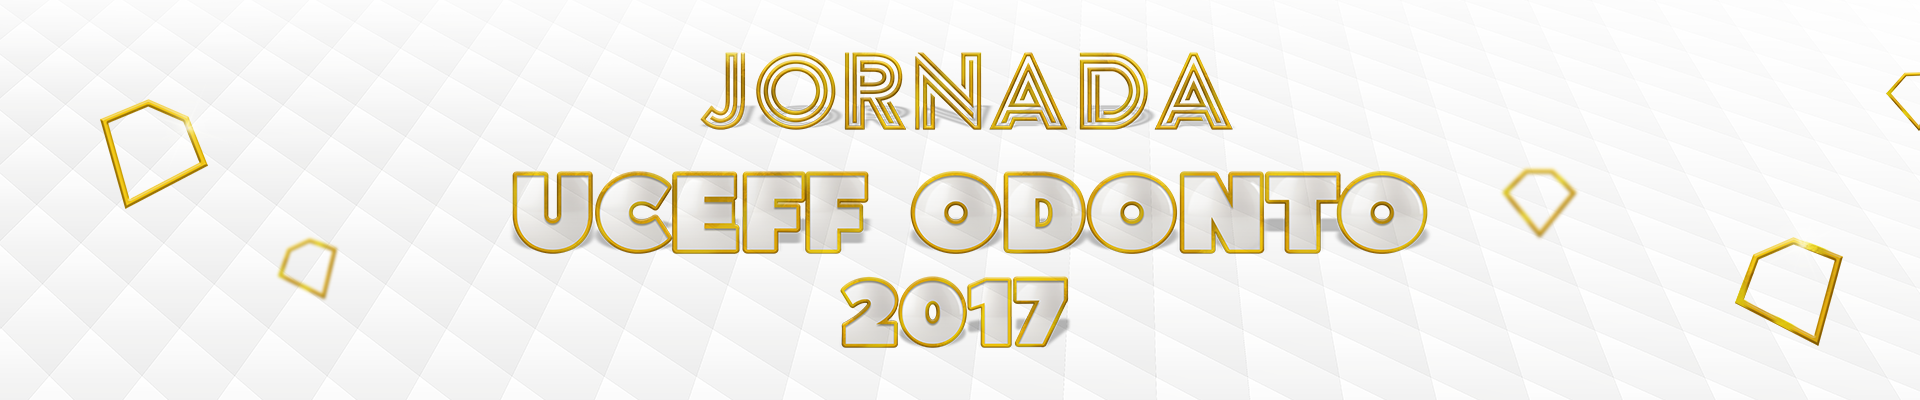 Jornada UCEFF Odonto 2017